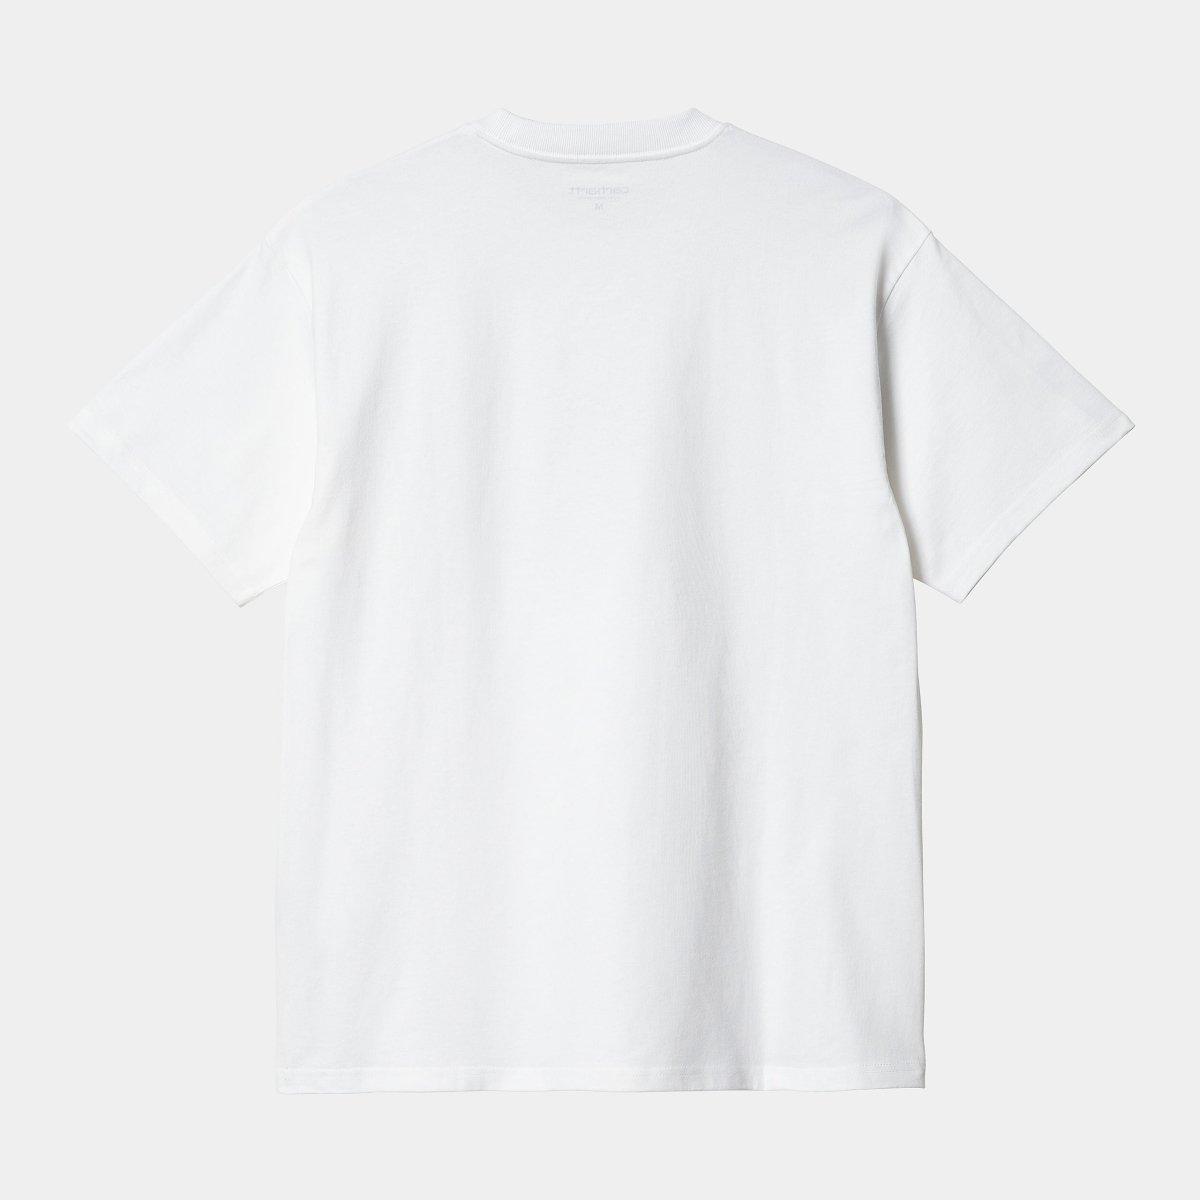 Carhartt WIP S/S Antleaf T-shirt - White - SUPERCONSCIOUS BERLIN